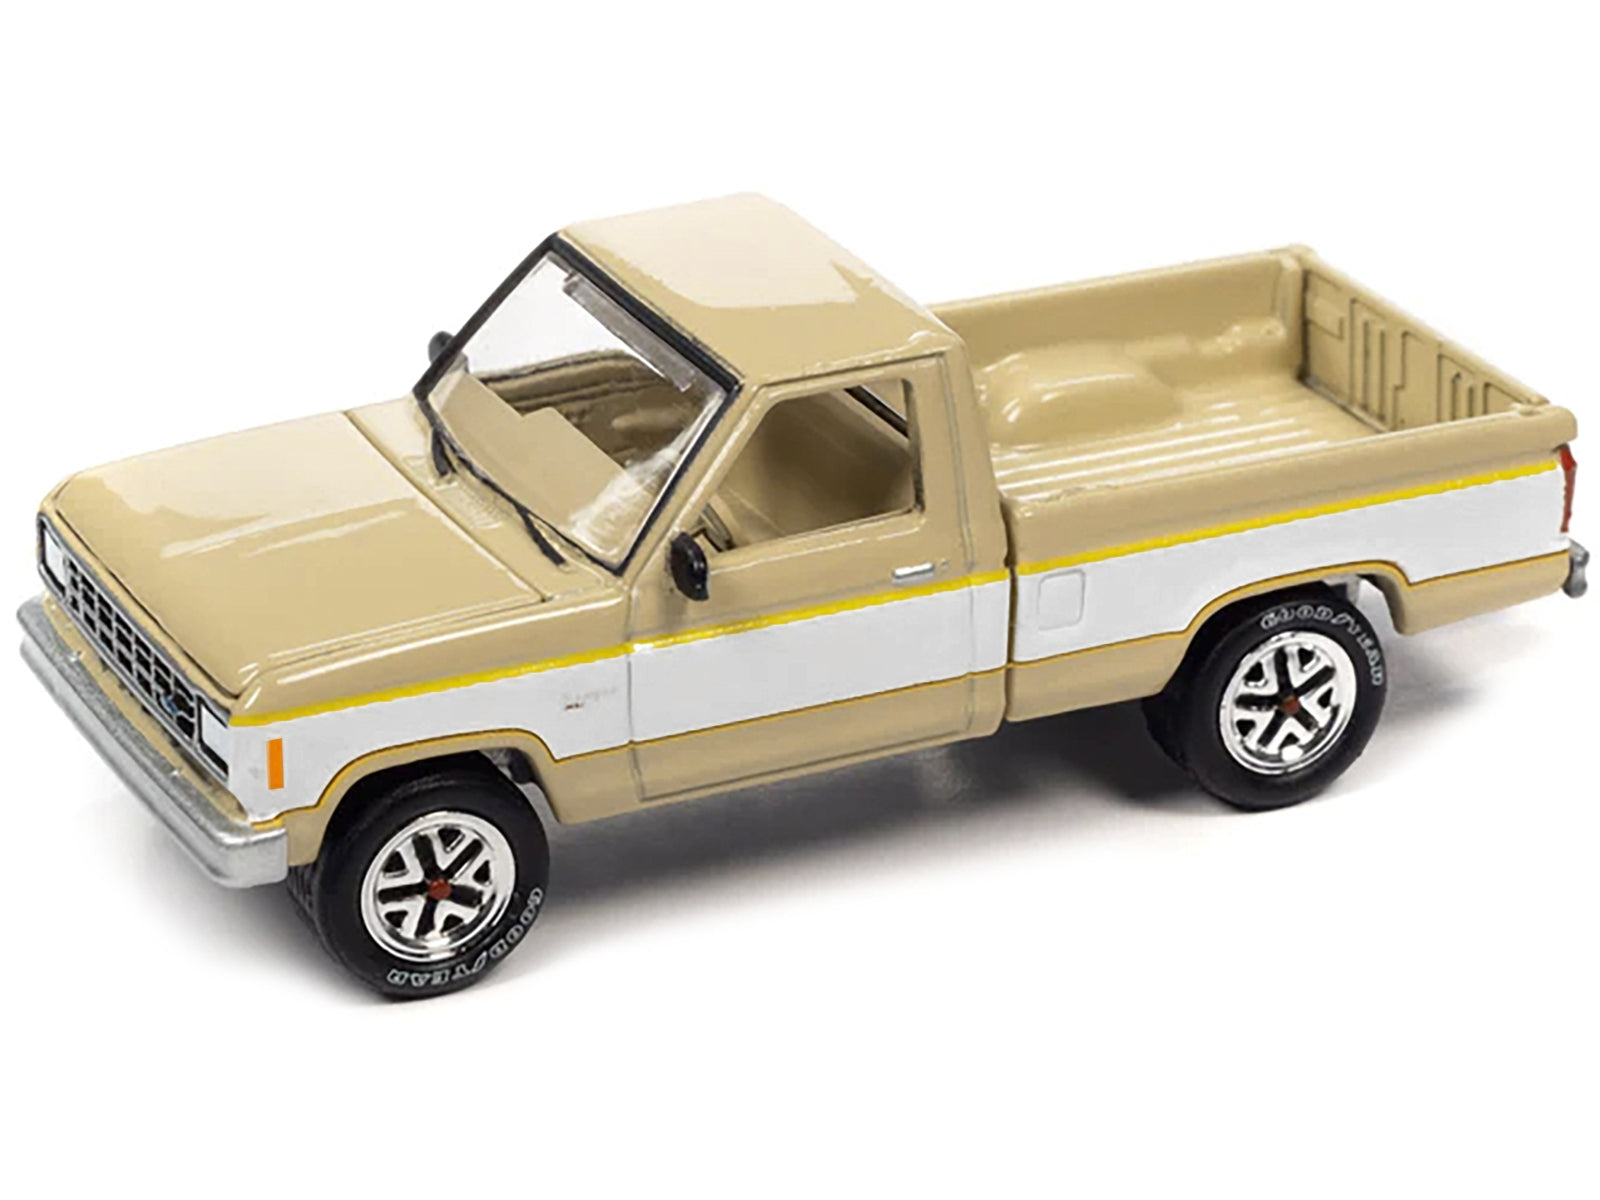 1983 Ford Ranger XLS Pickup Truck Light Desert Tan and White with Open Flatbed Trailer